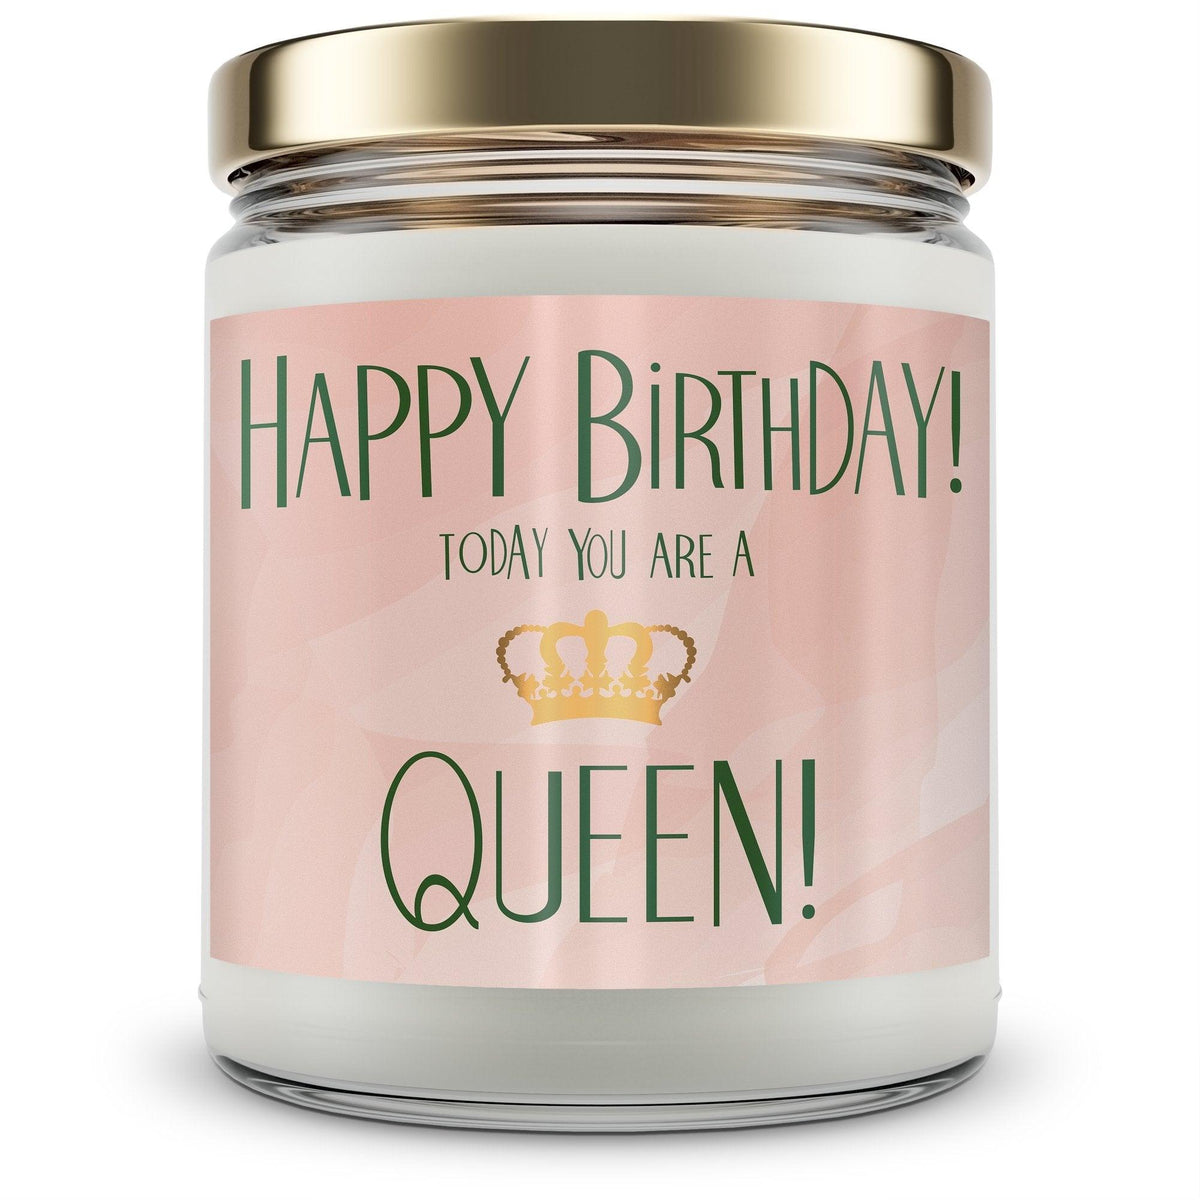 Happy Birthday QUEEN! - Mint Sugar Candle